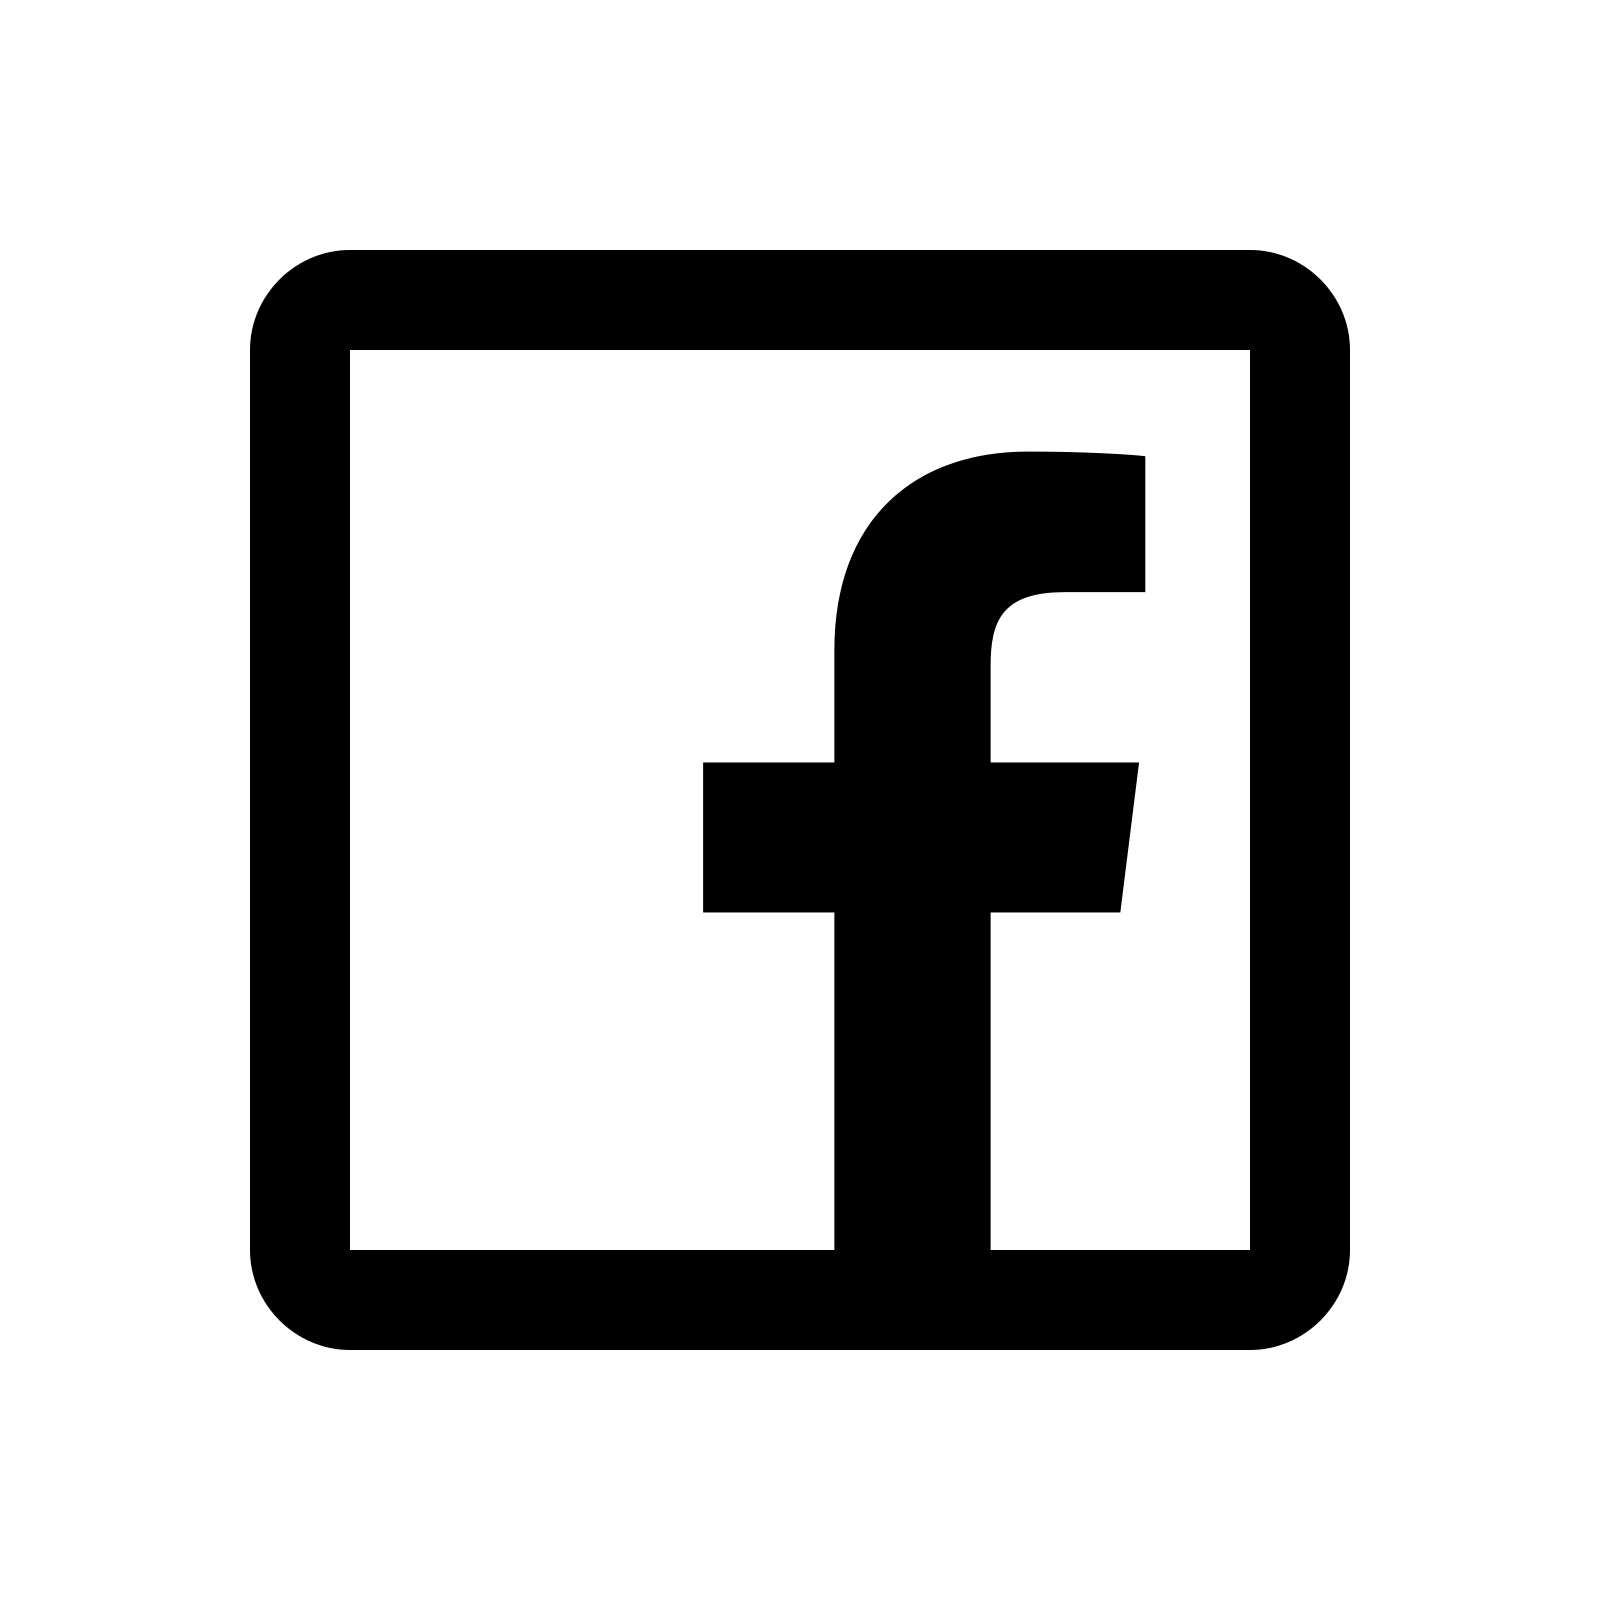 Facebook Computer Icons Logo - facebook icon png download - 1600*1600 ...